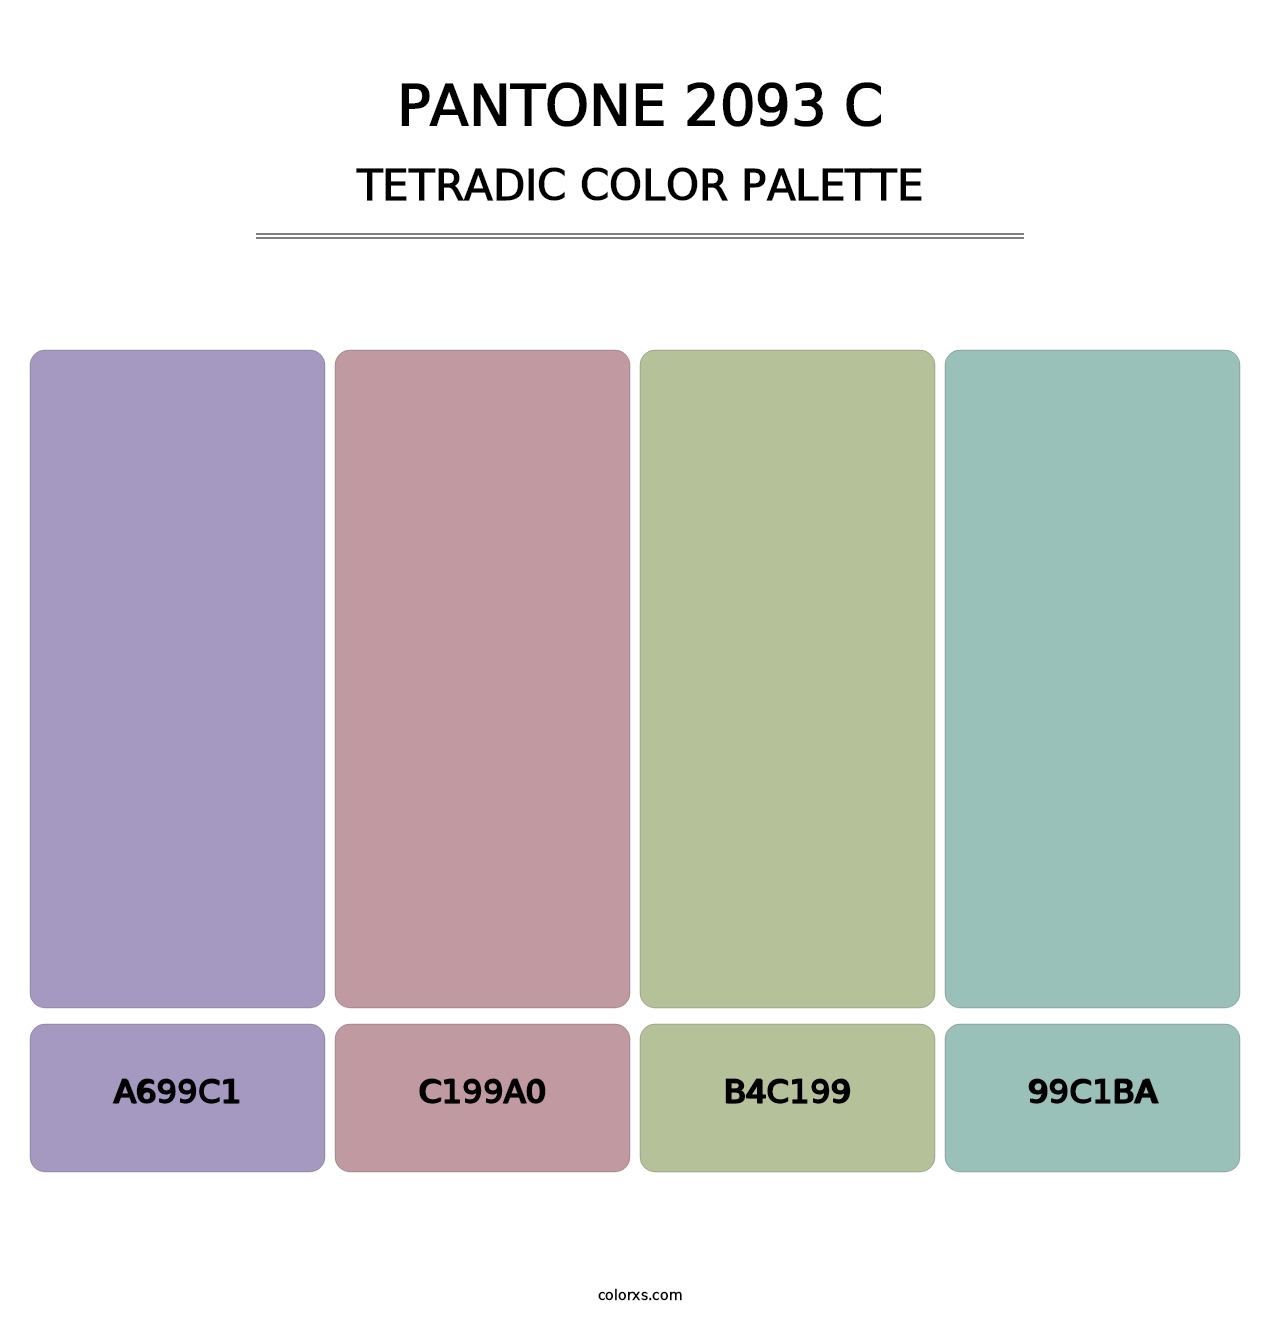 PANTONE 2093 C - Tetradic Color Palette